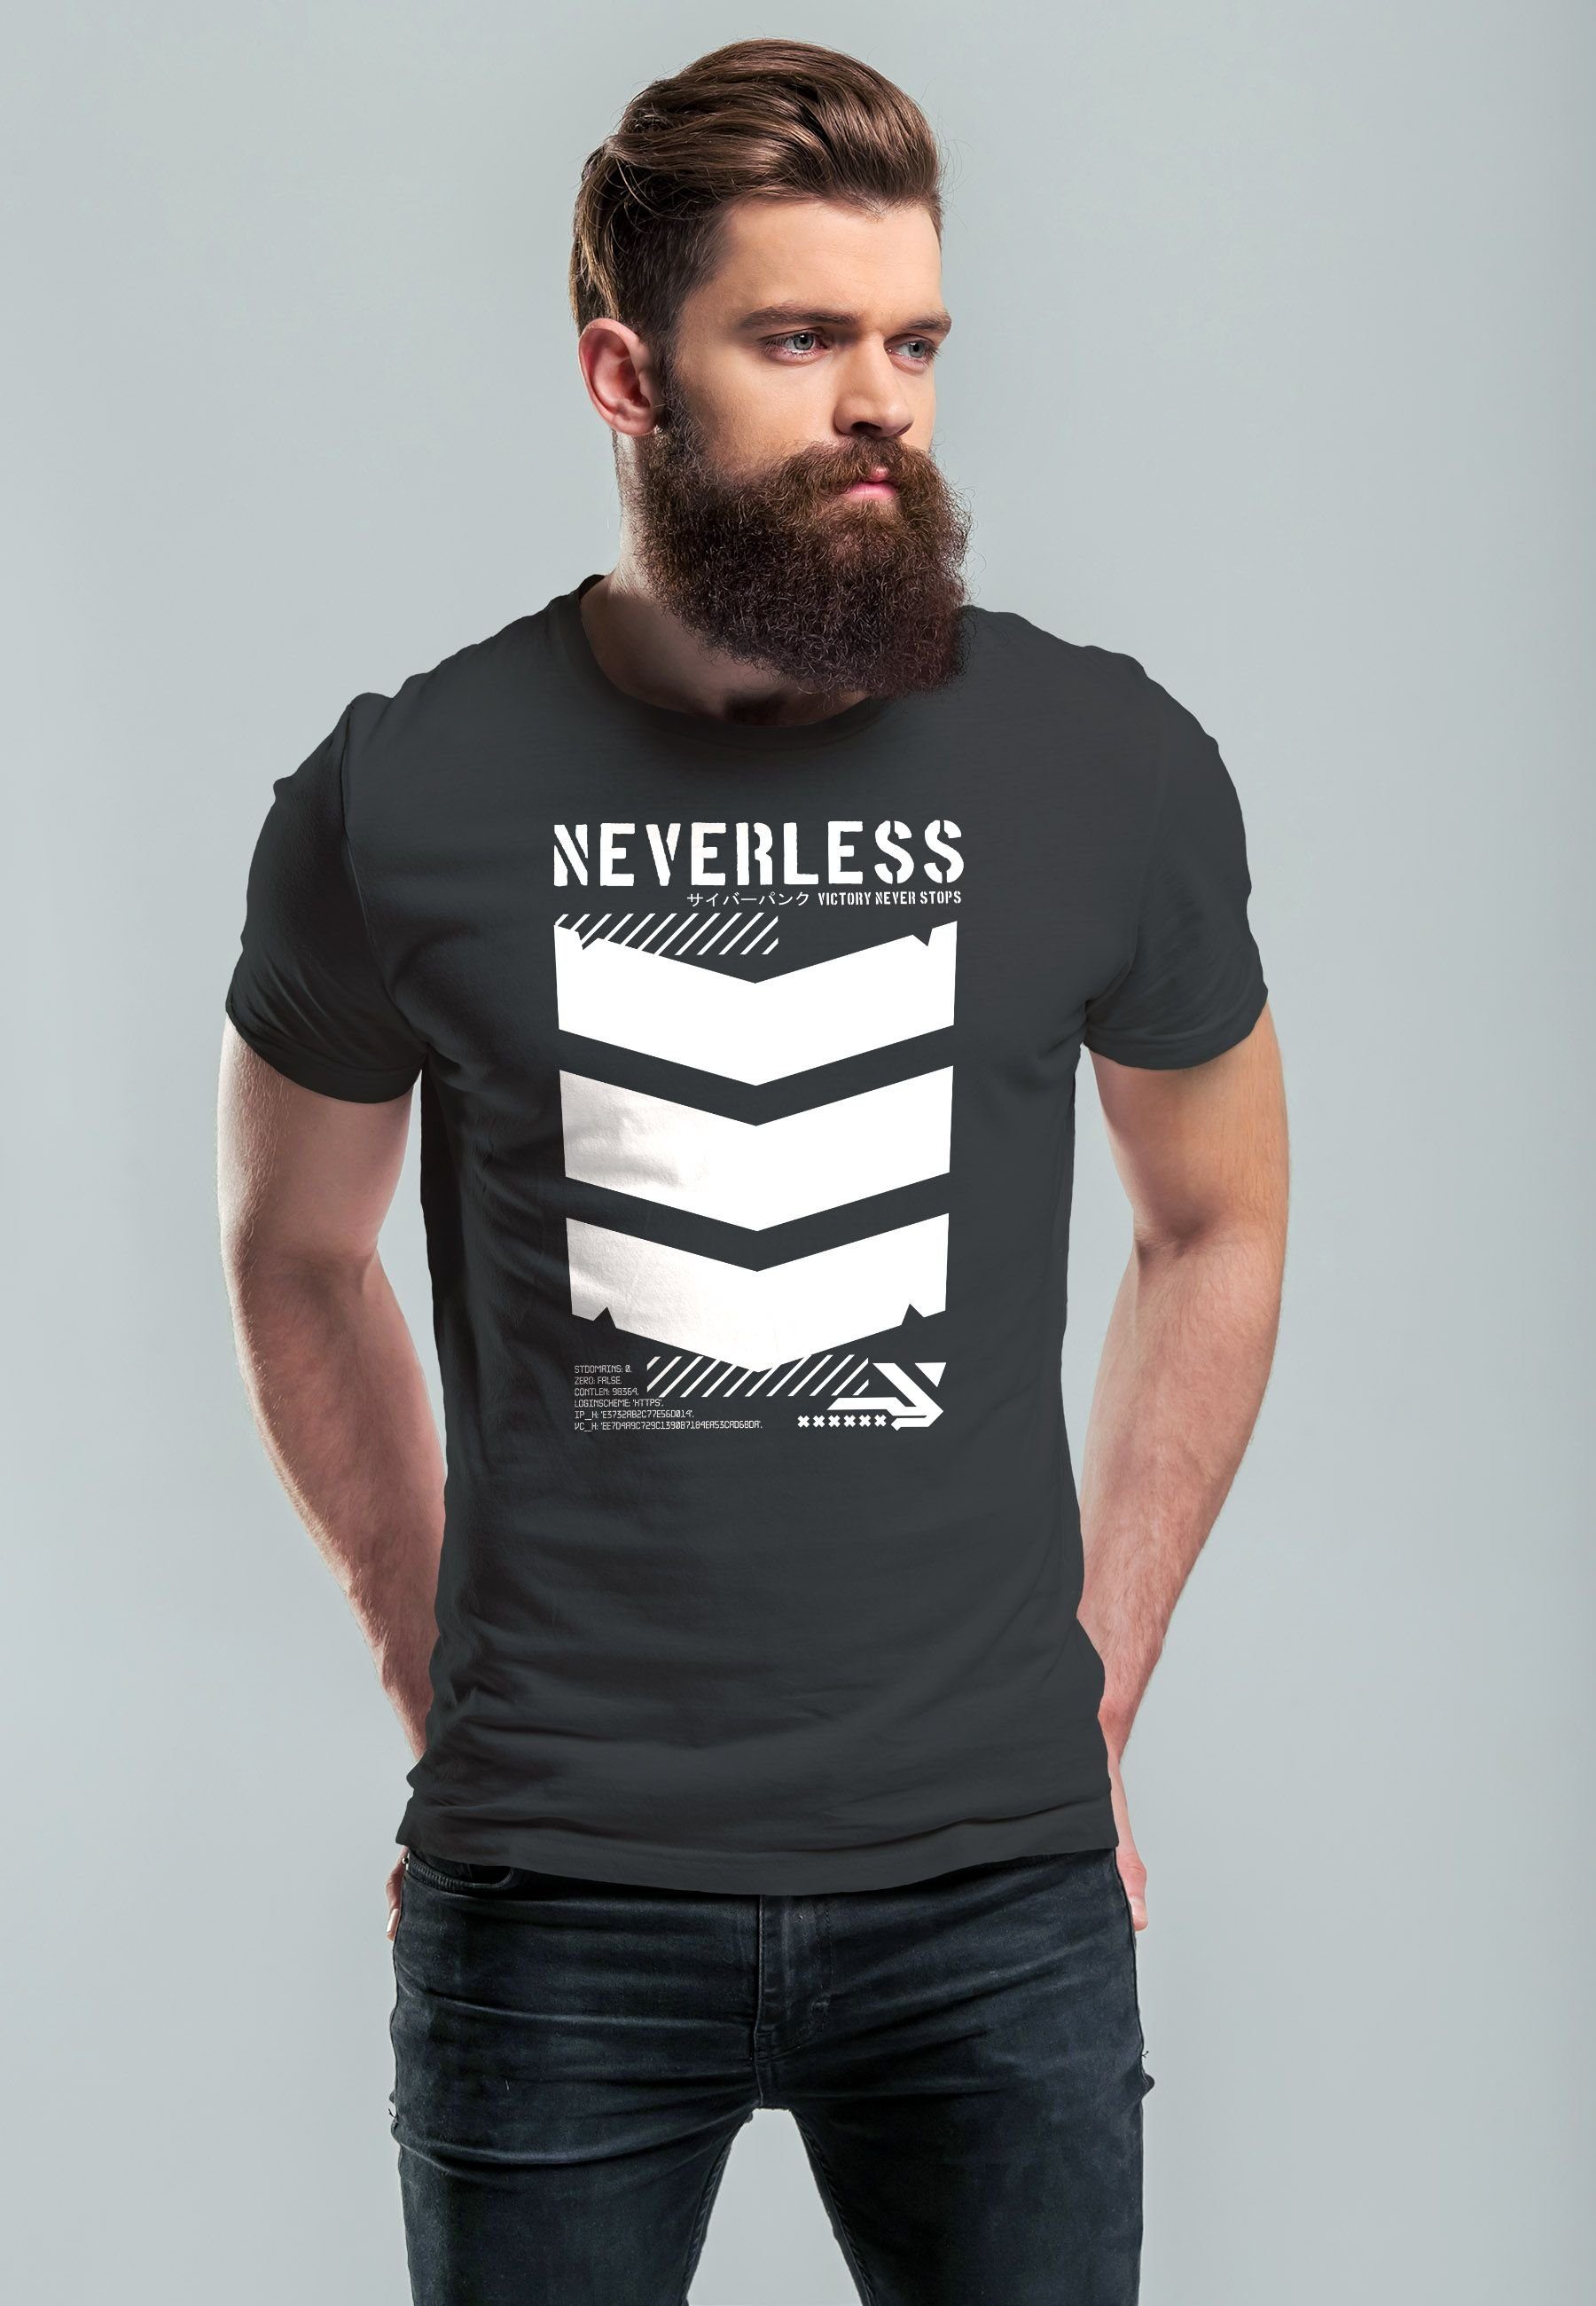 Neverless Print-Shirt Herren Streetstyle Motive Techwear Military Print Fas Japanese T-Shirt Trend anthrazit mit